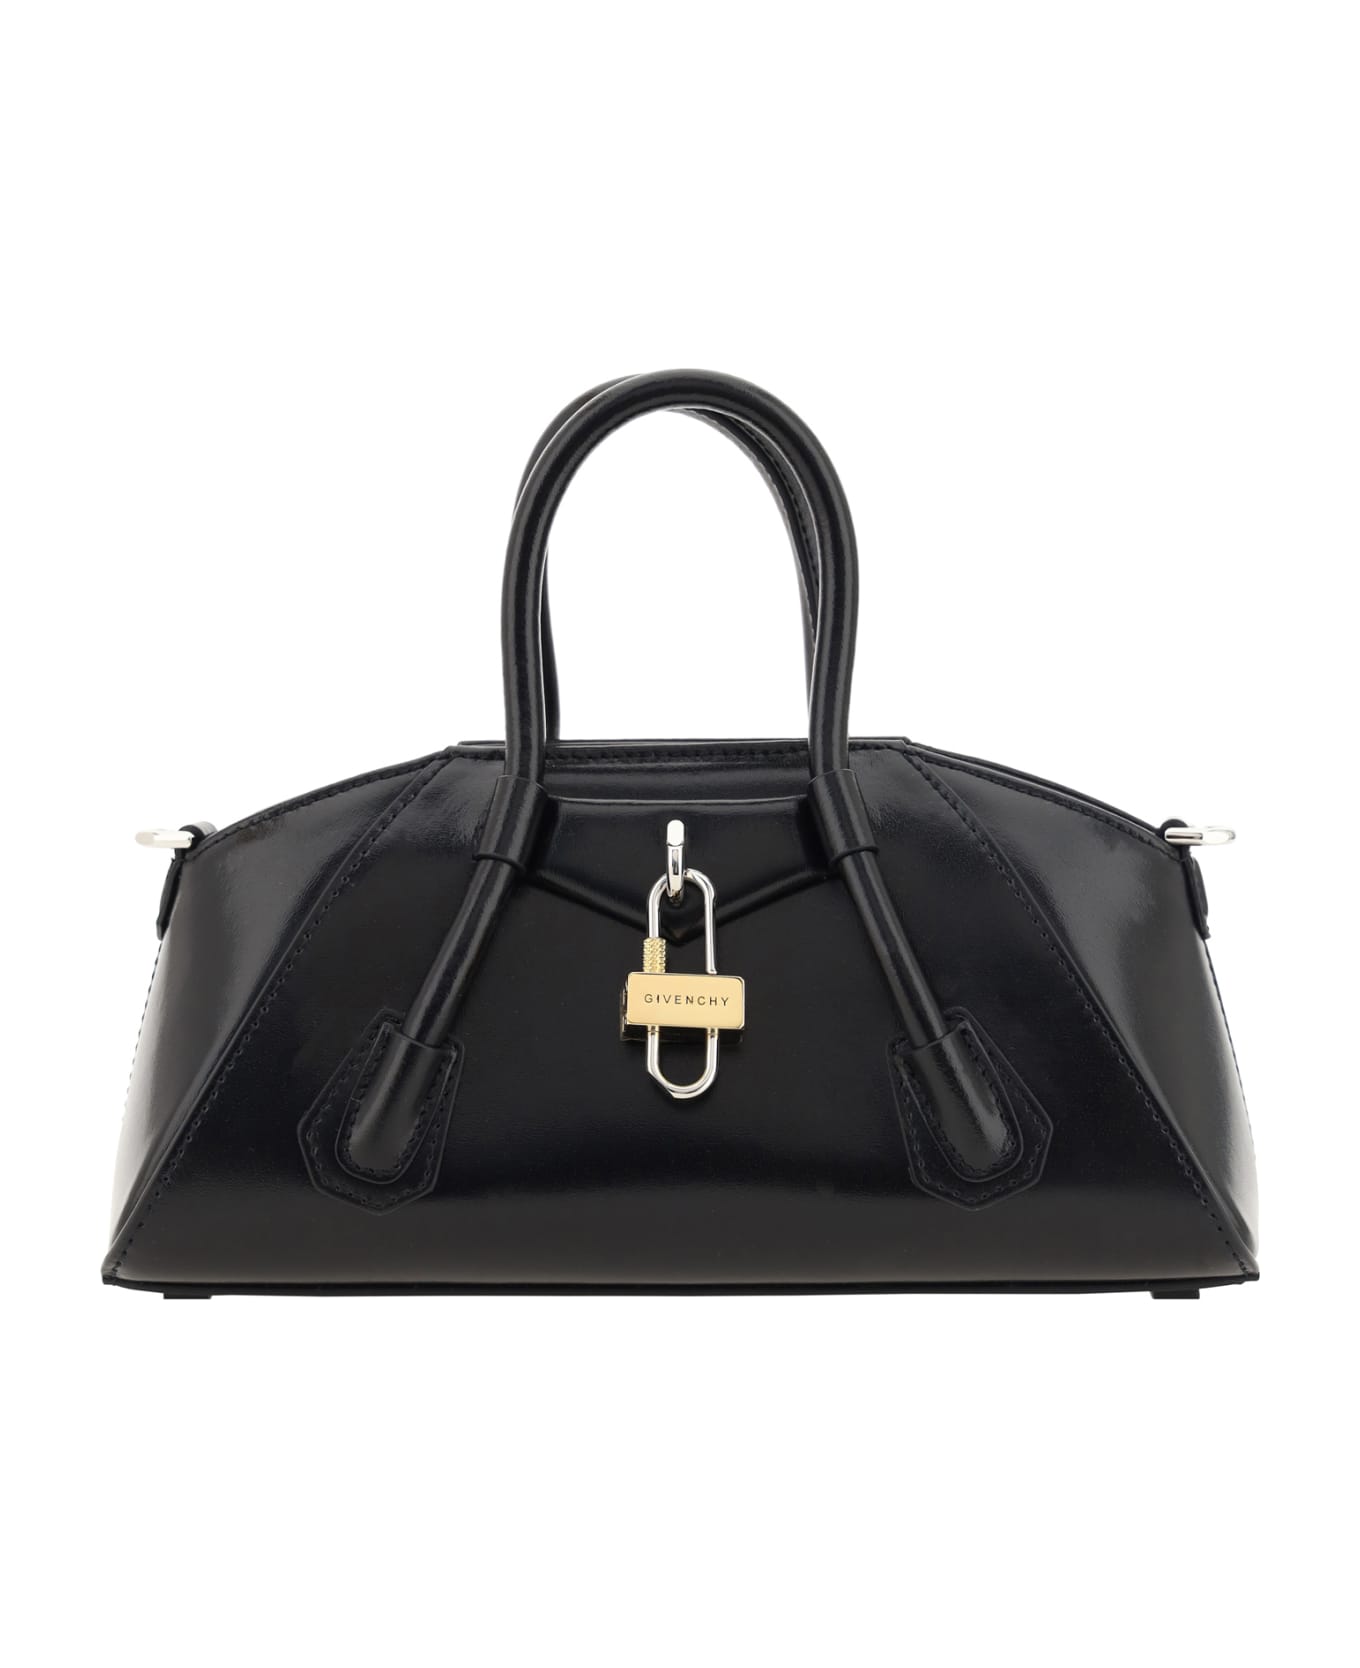 Givenchy Stretch Mini Handbag - Black